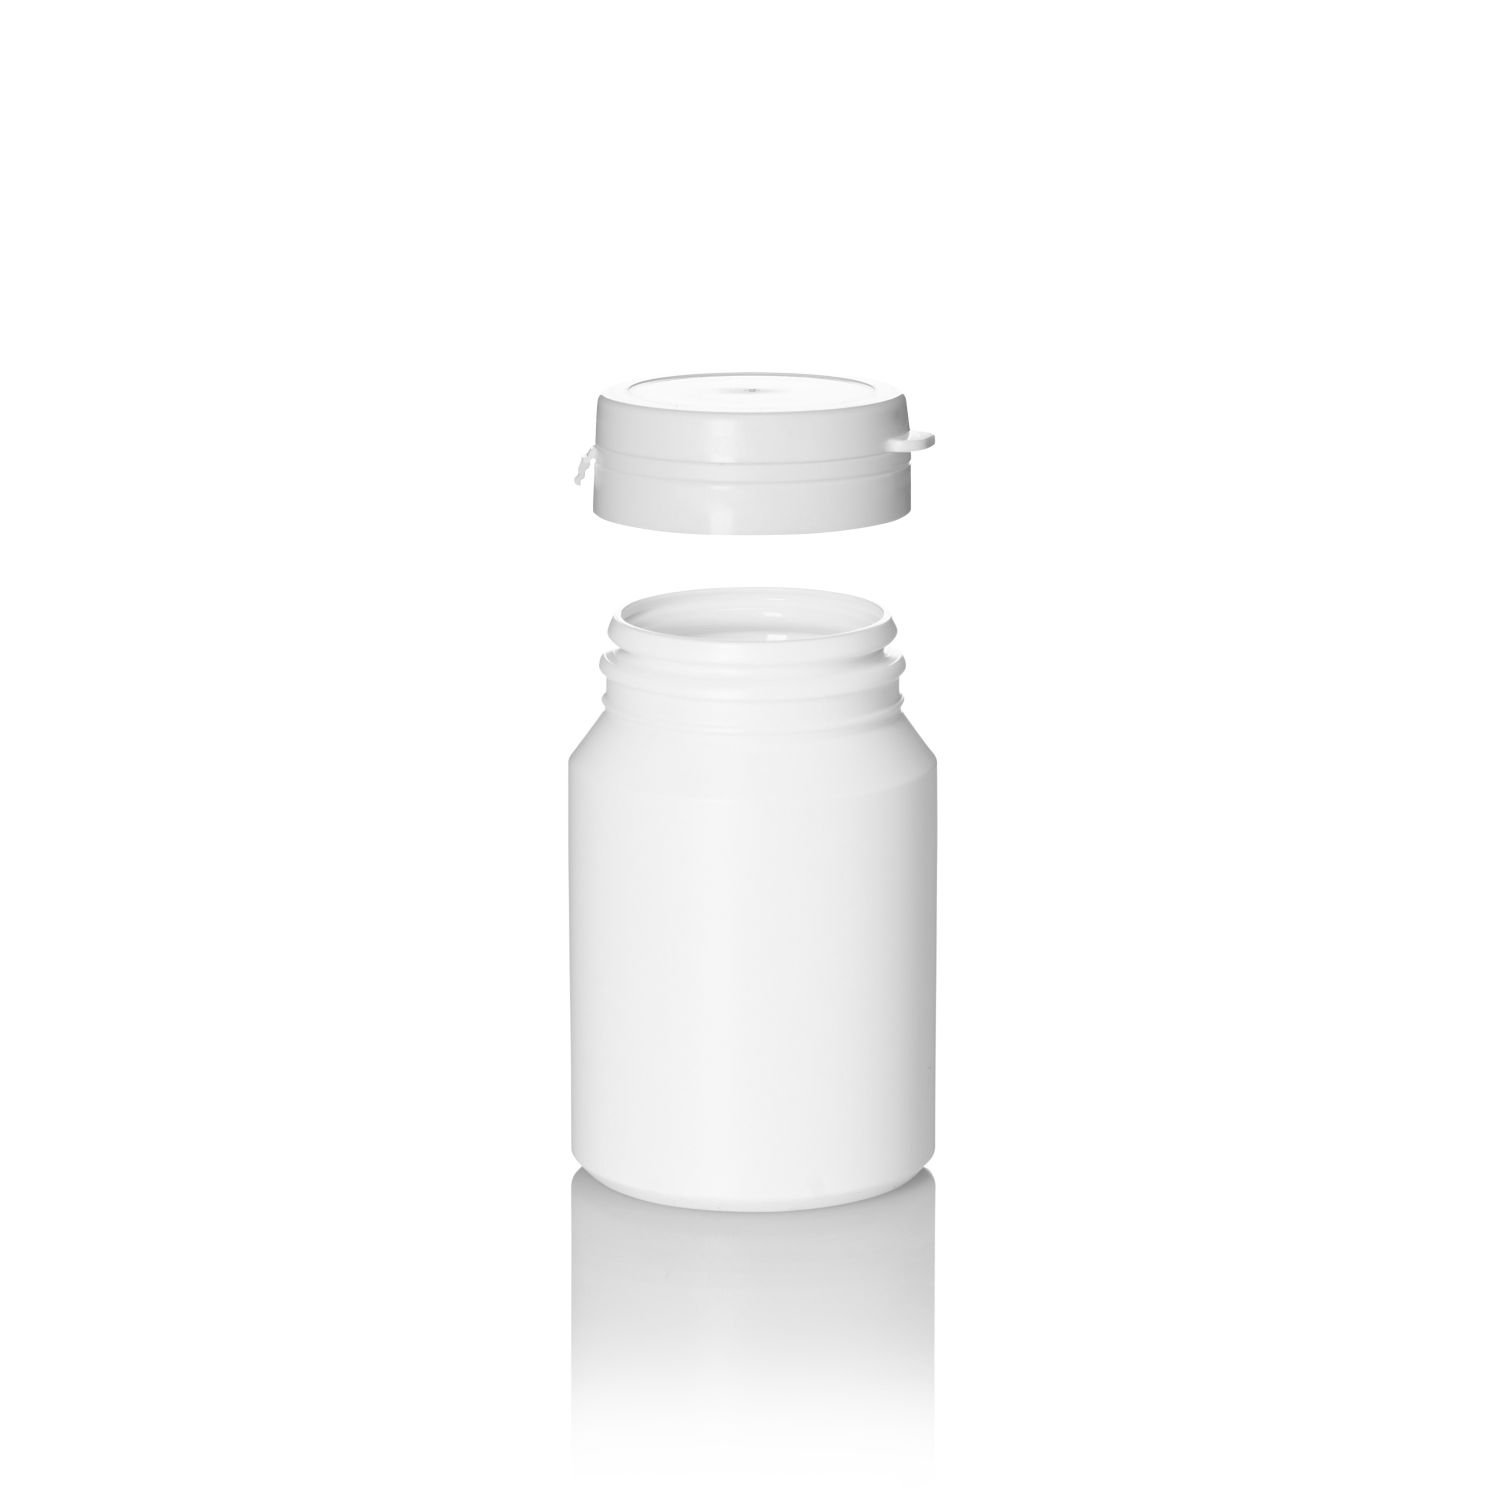 100ml White PP Tamper Evident Tampertainer Jar